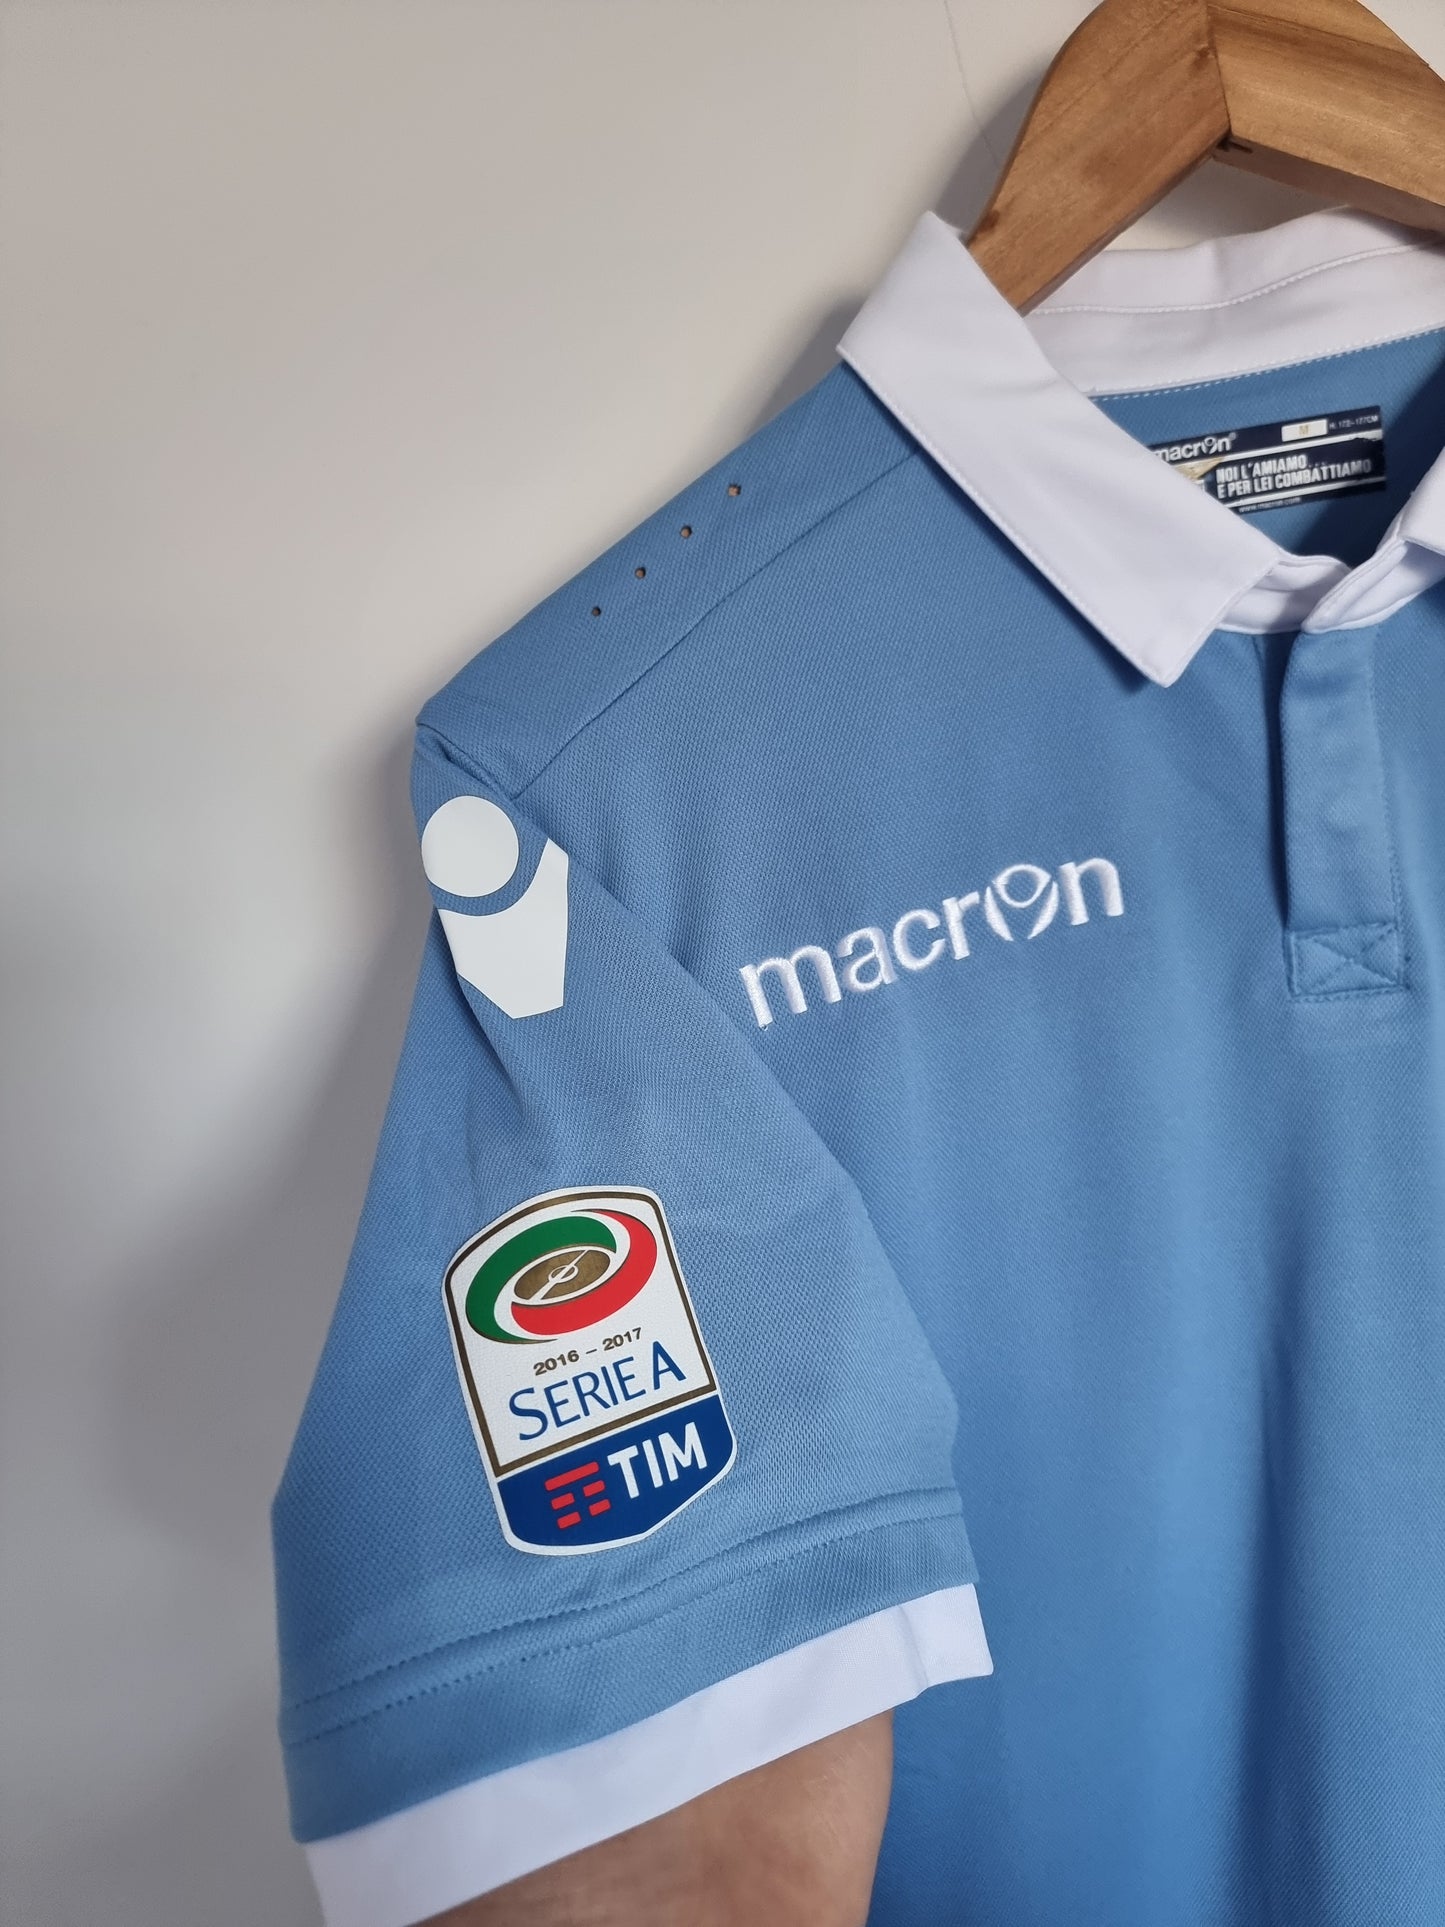 Macron Lazio 16/17 'Keita Balde 14' Home Shirt Medium